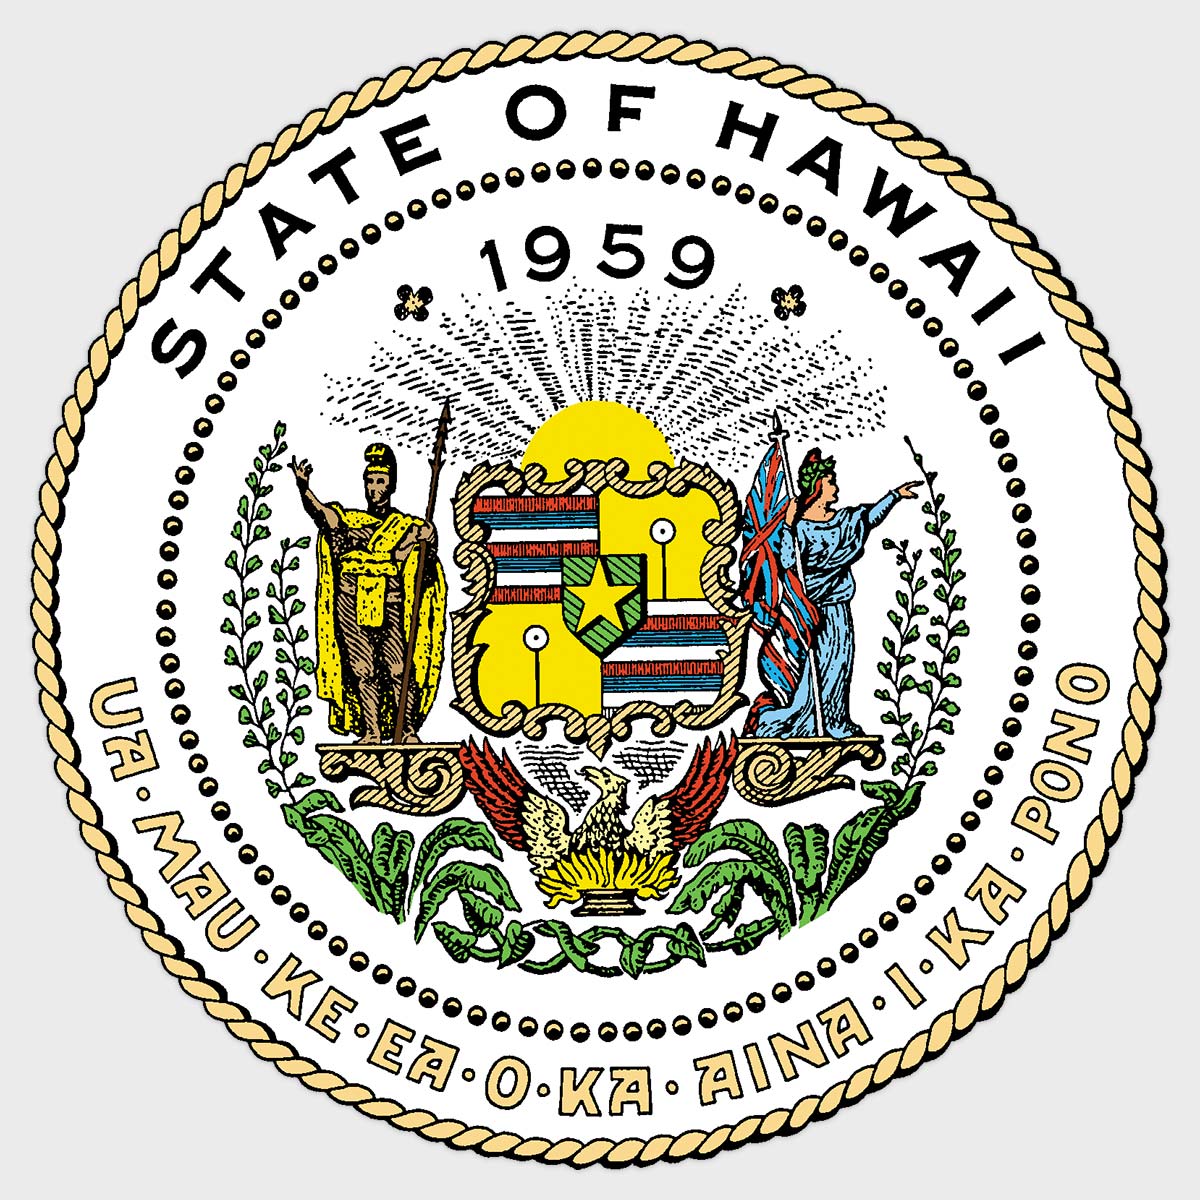 Hawaii Information Portal logo